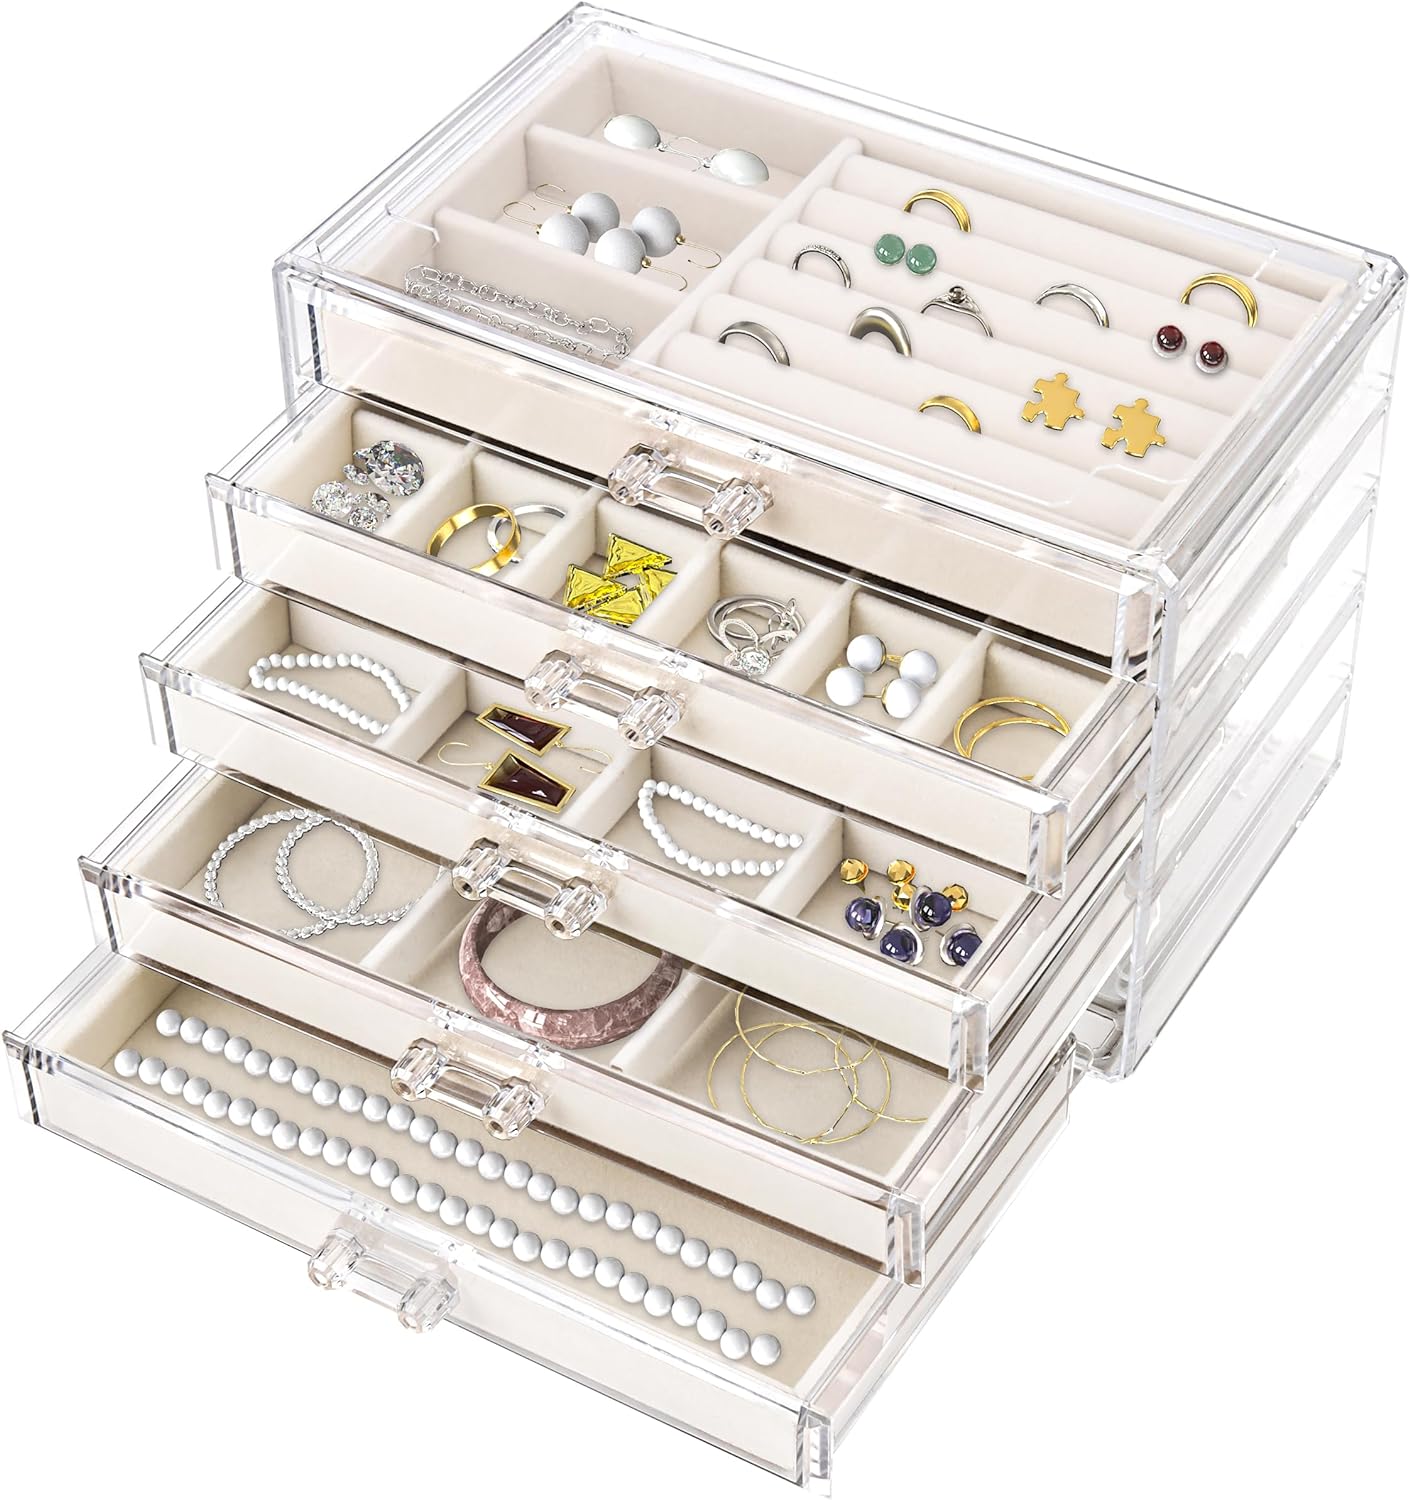 Hmdivor Acrylic Jewelry Organizer with 5 Drawers, Jewelry Organizer Drawer with Velvet Trays, Earring Jewelry Organizer for Jewelry Storage and Display Gift for Women(Beige)